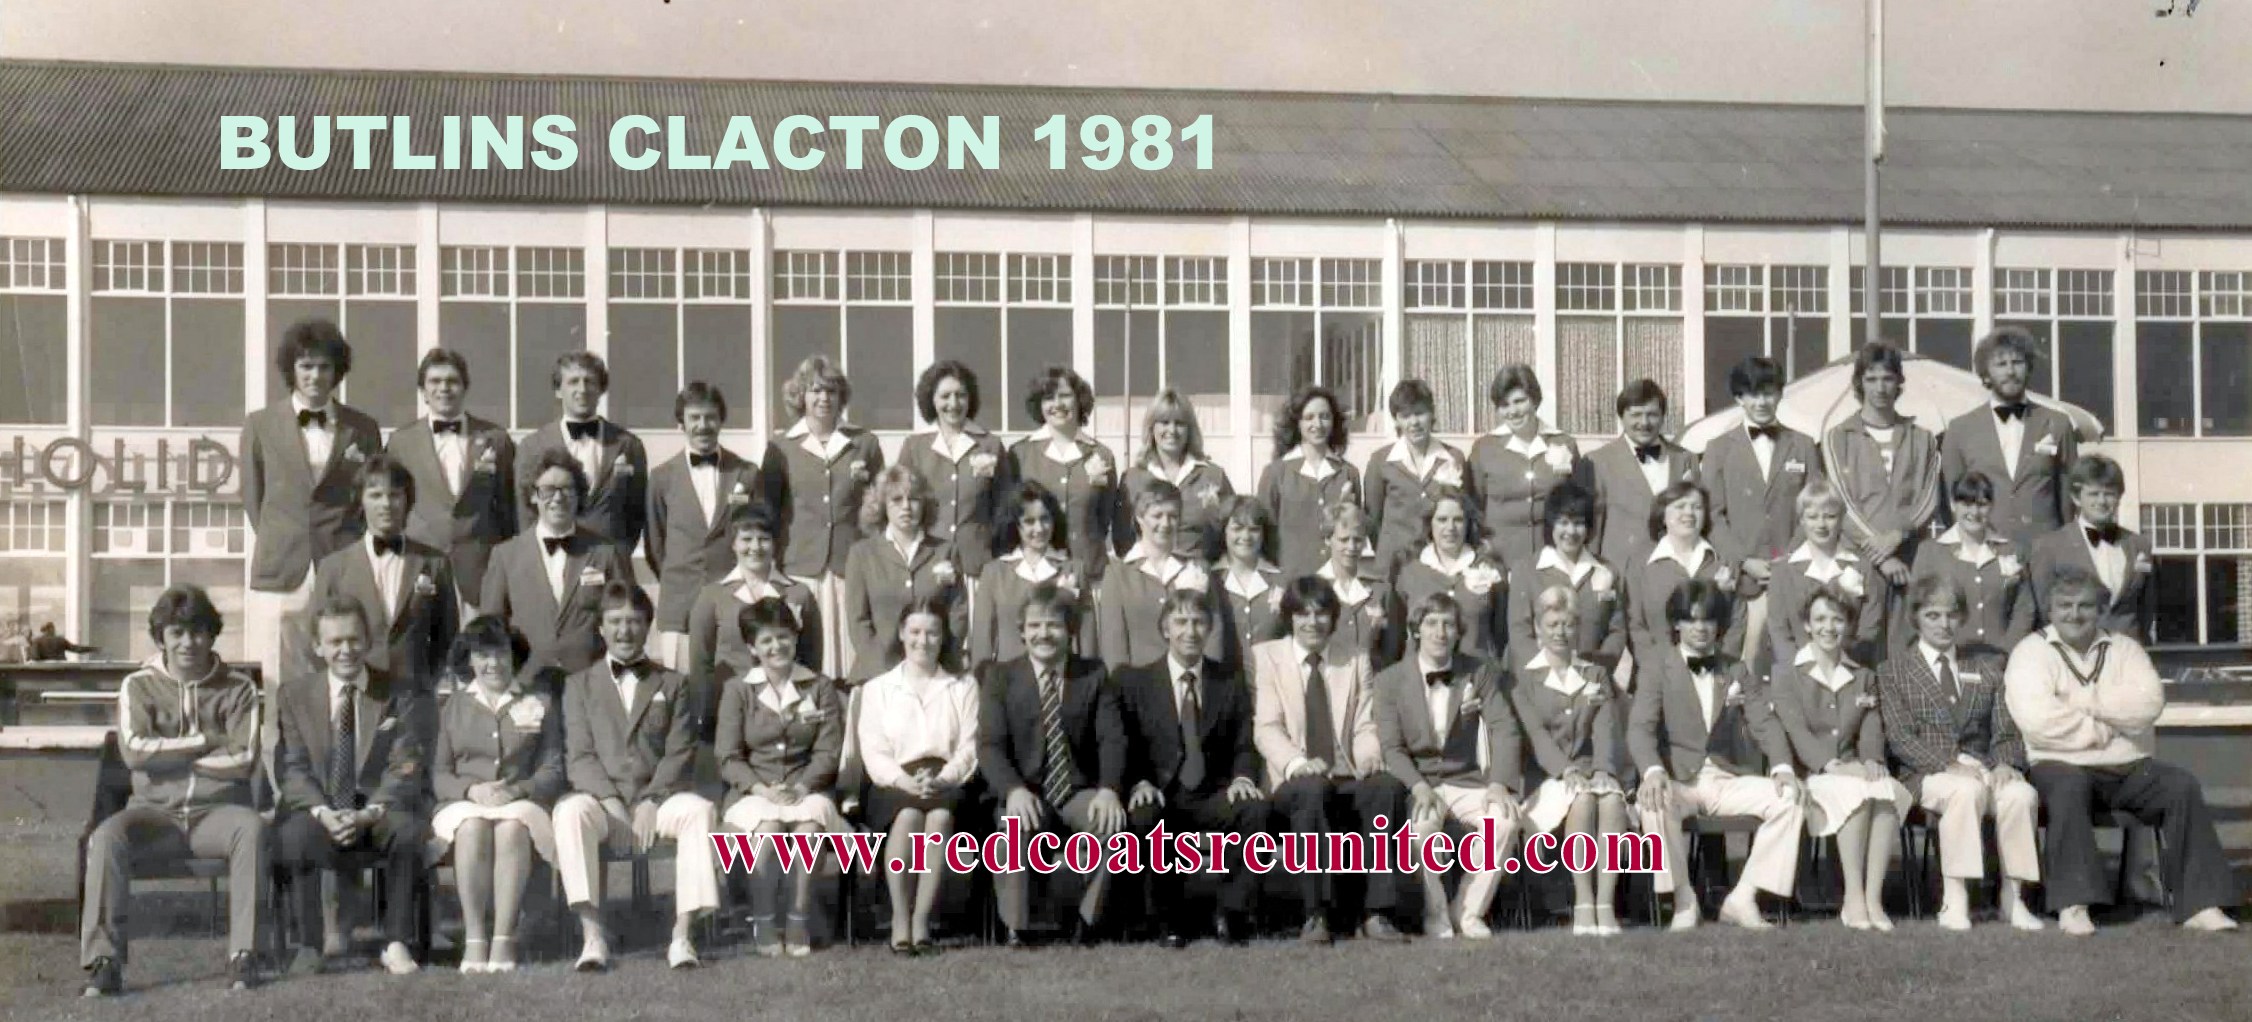 Butlins Claacton 1983 Ents Team at Redcoats Reunited